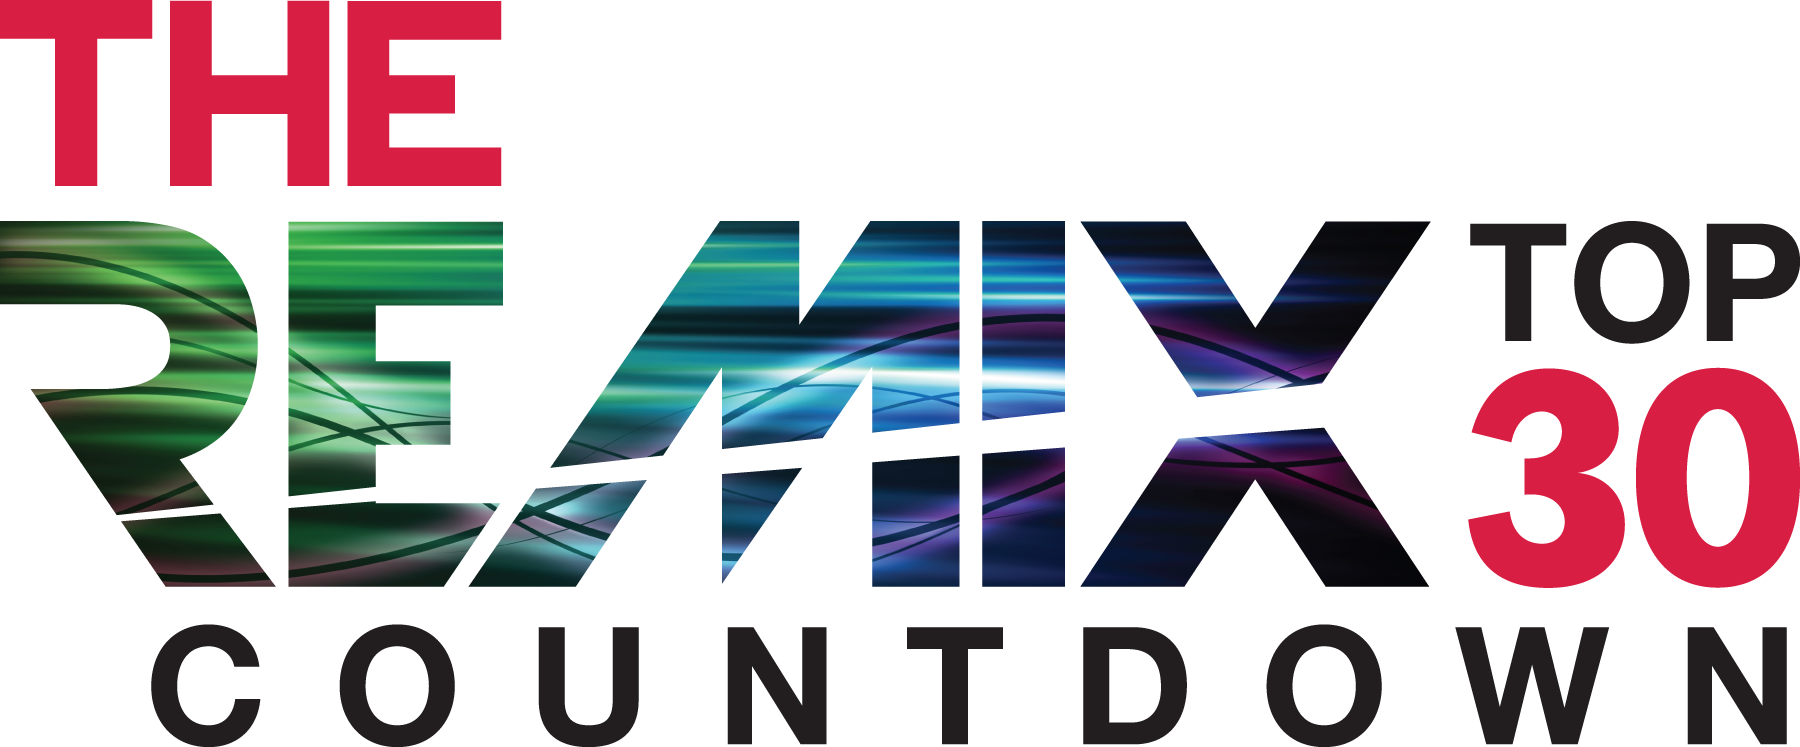 Remix Top30 Countdown Logo PNG